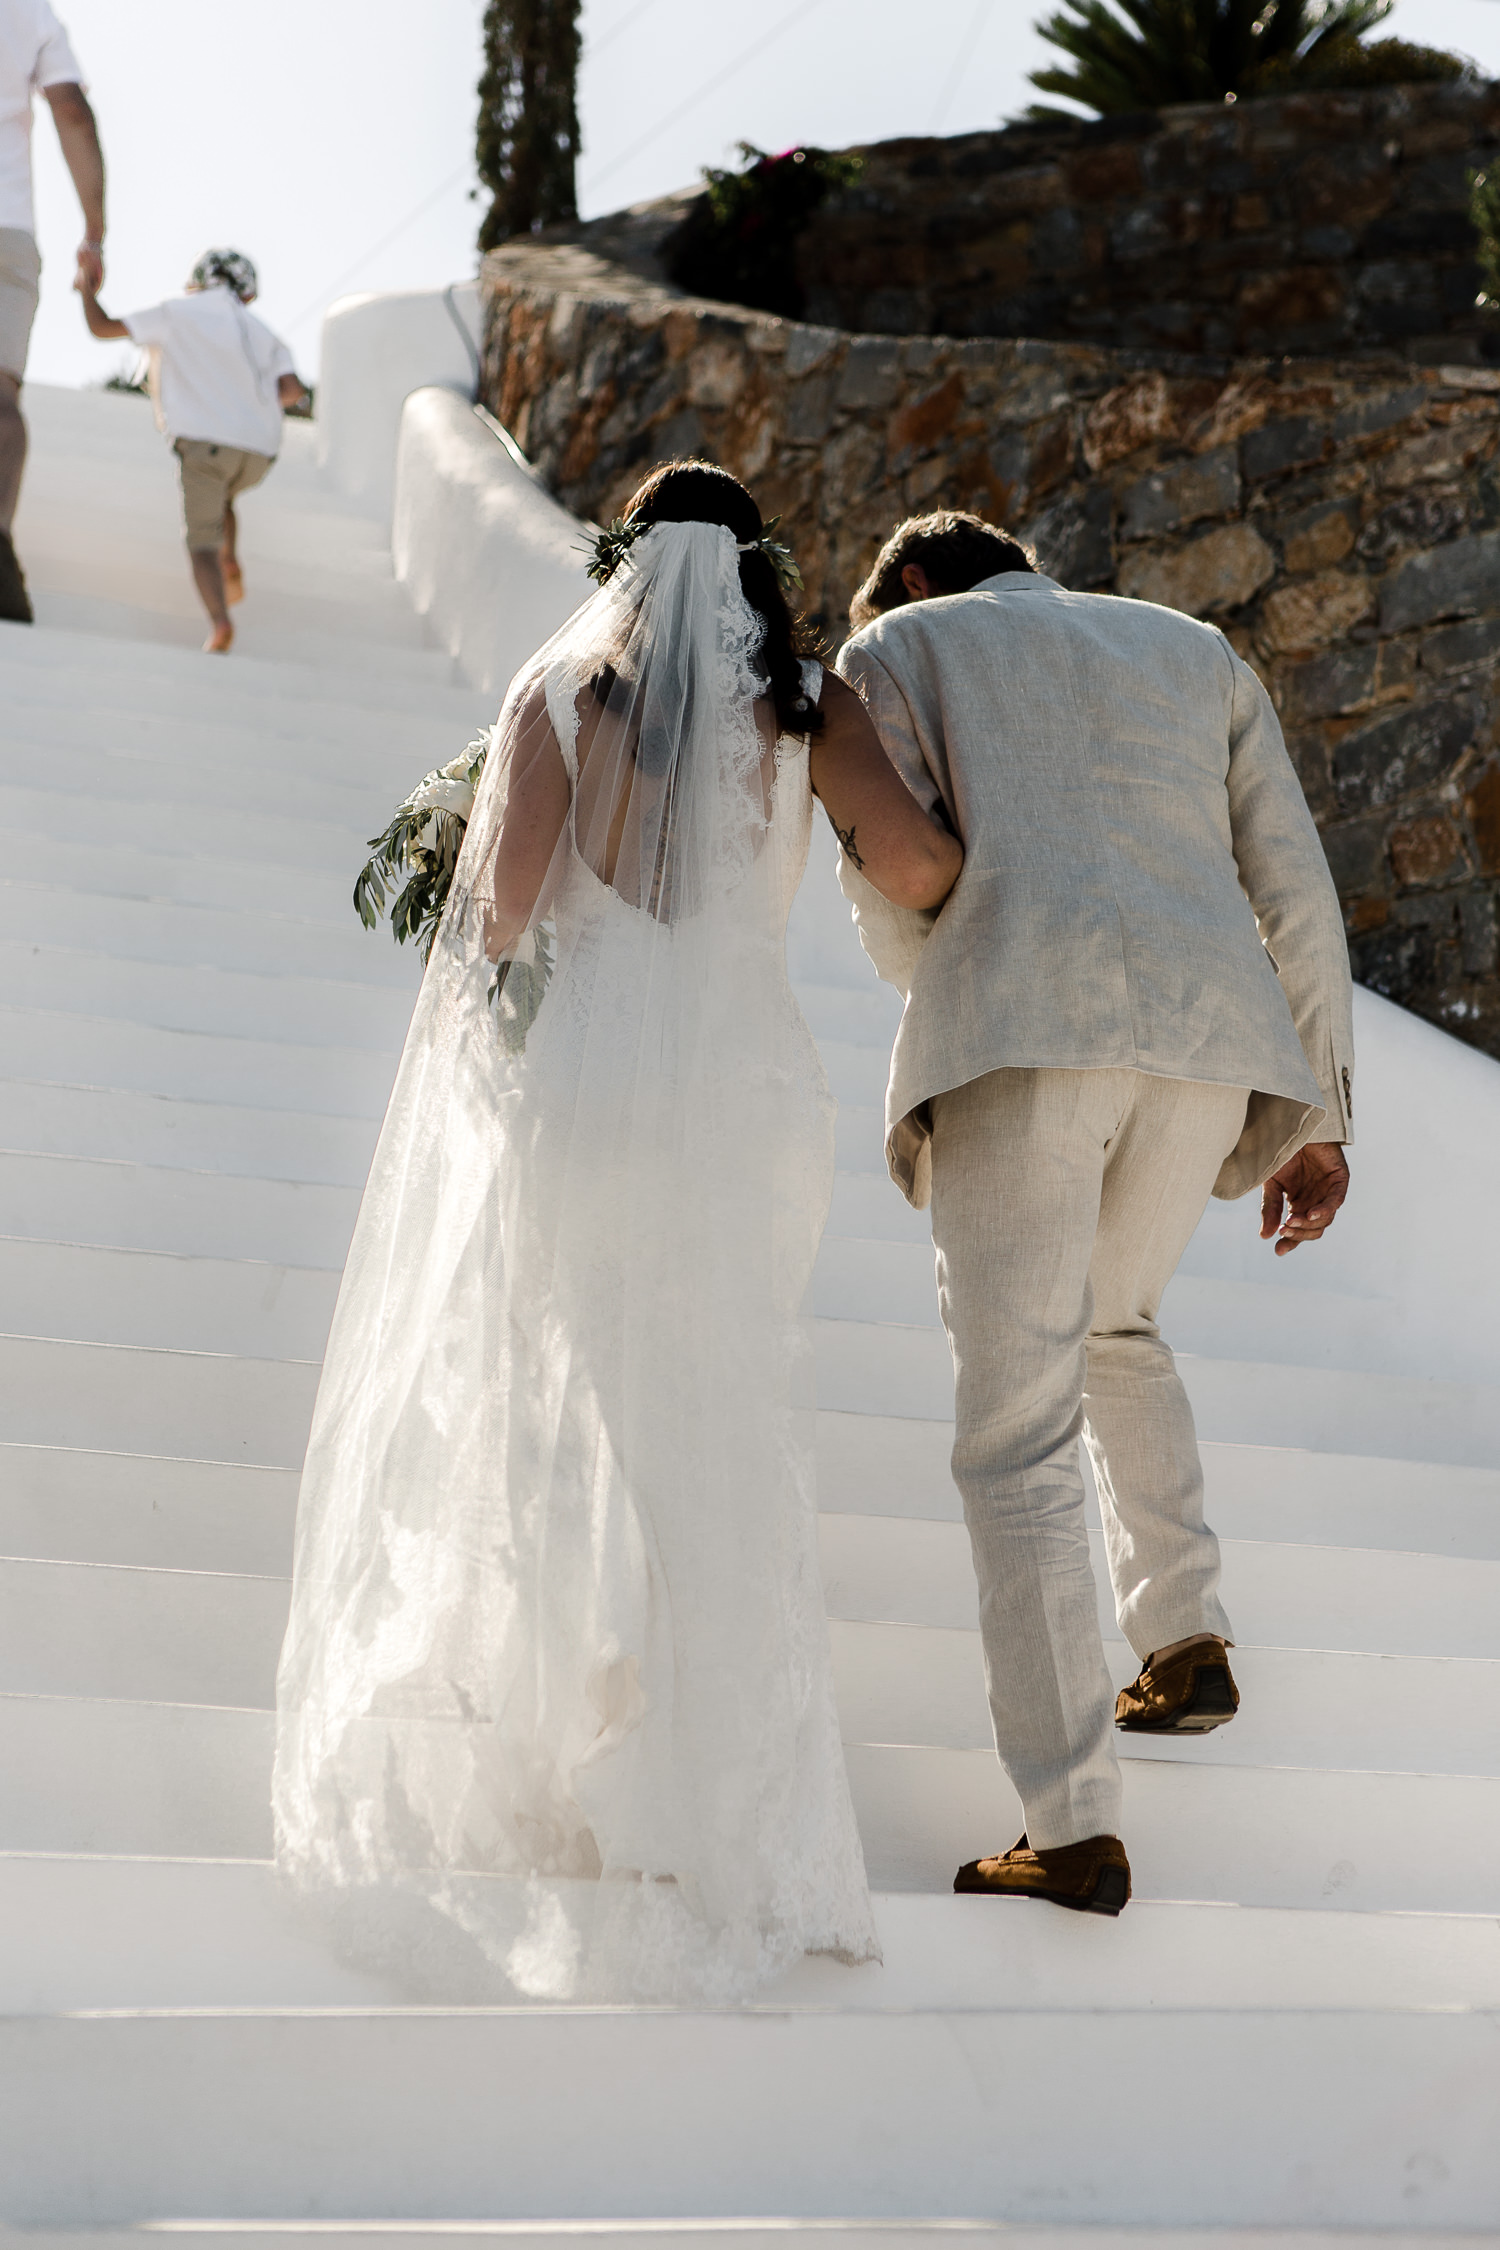 Fotomagoria - Elounda - Crete - Greece Wedding 123.jpg